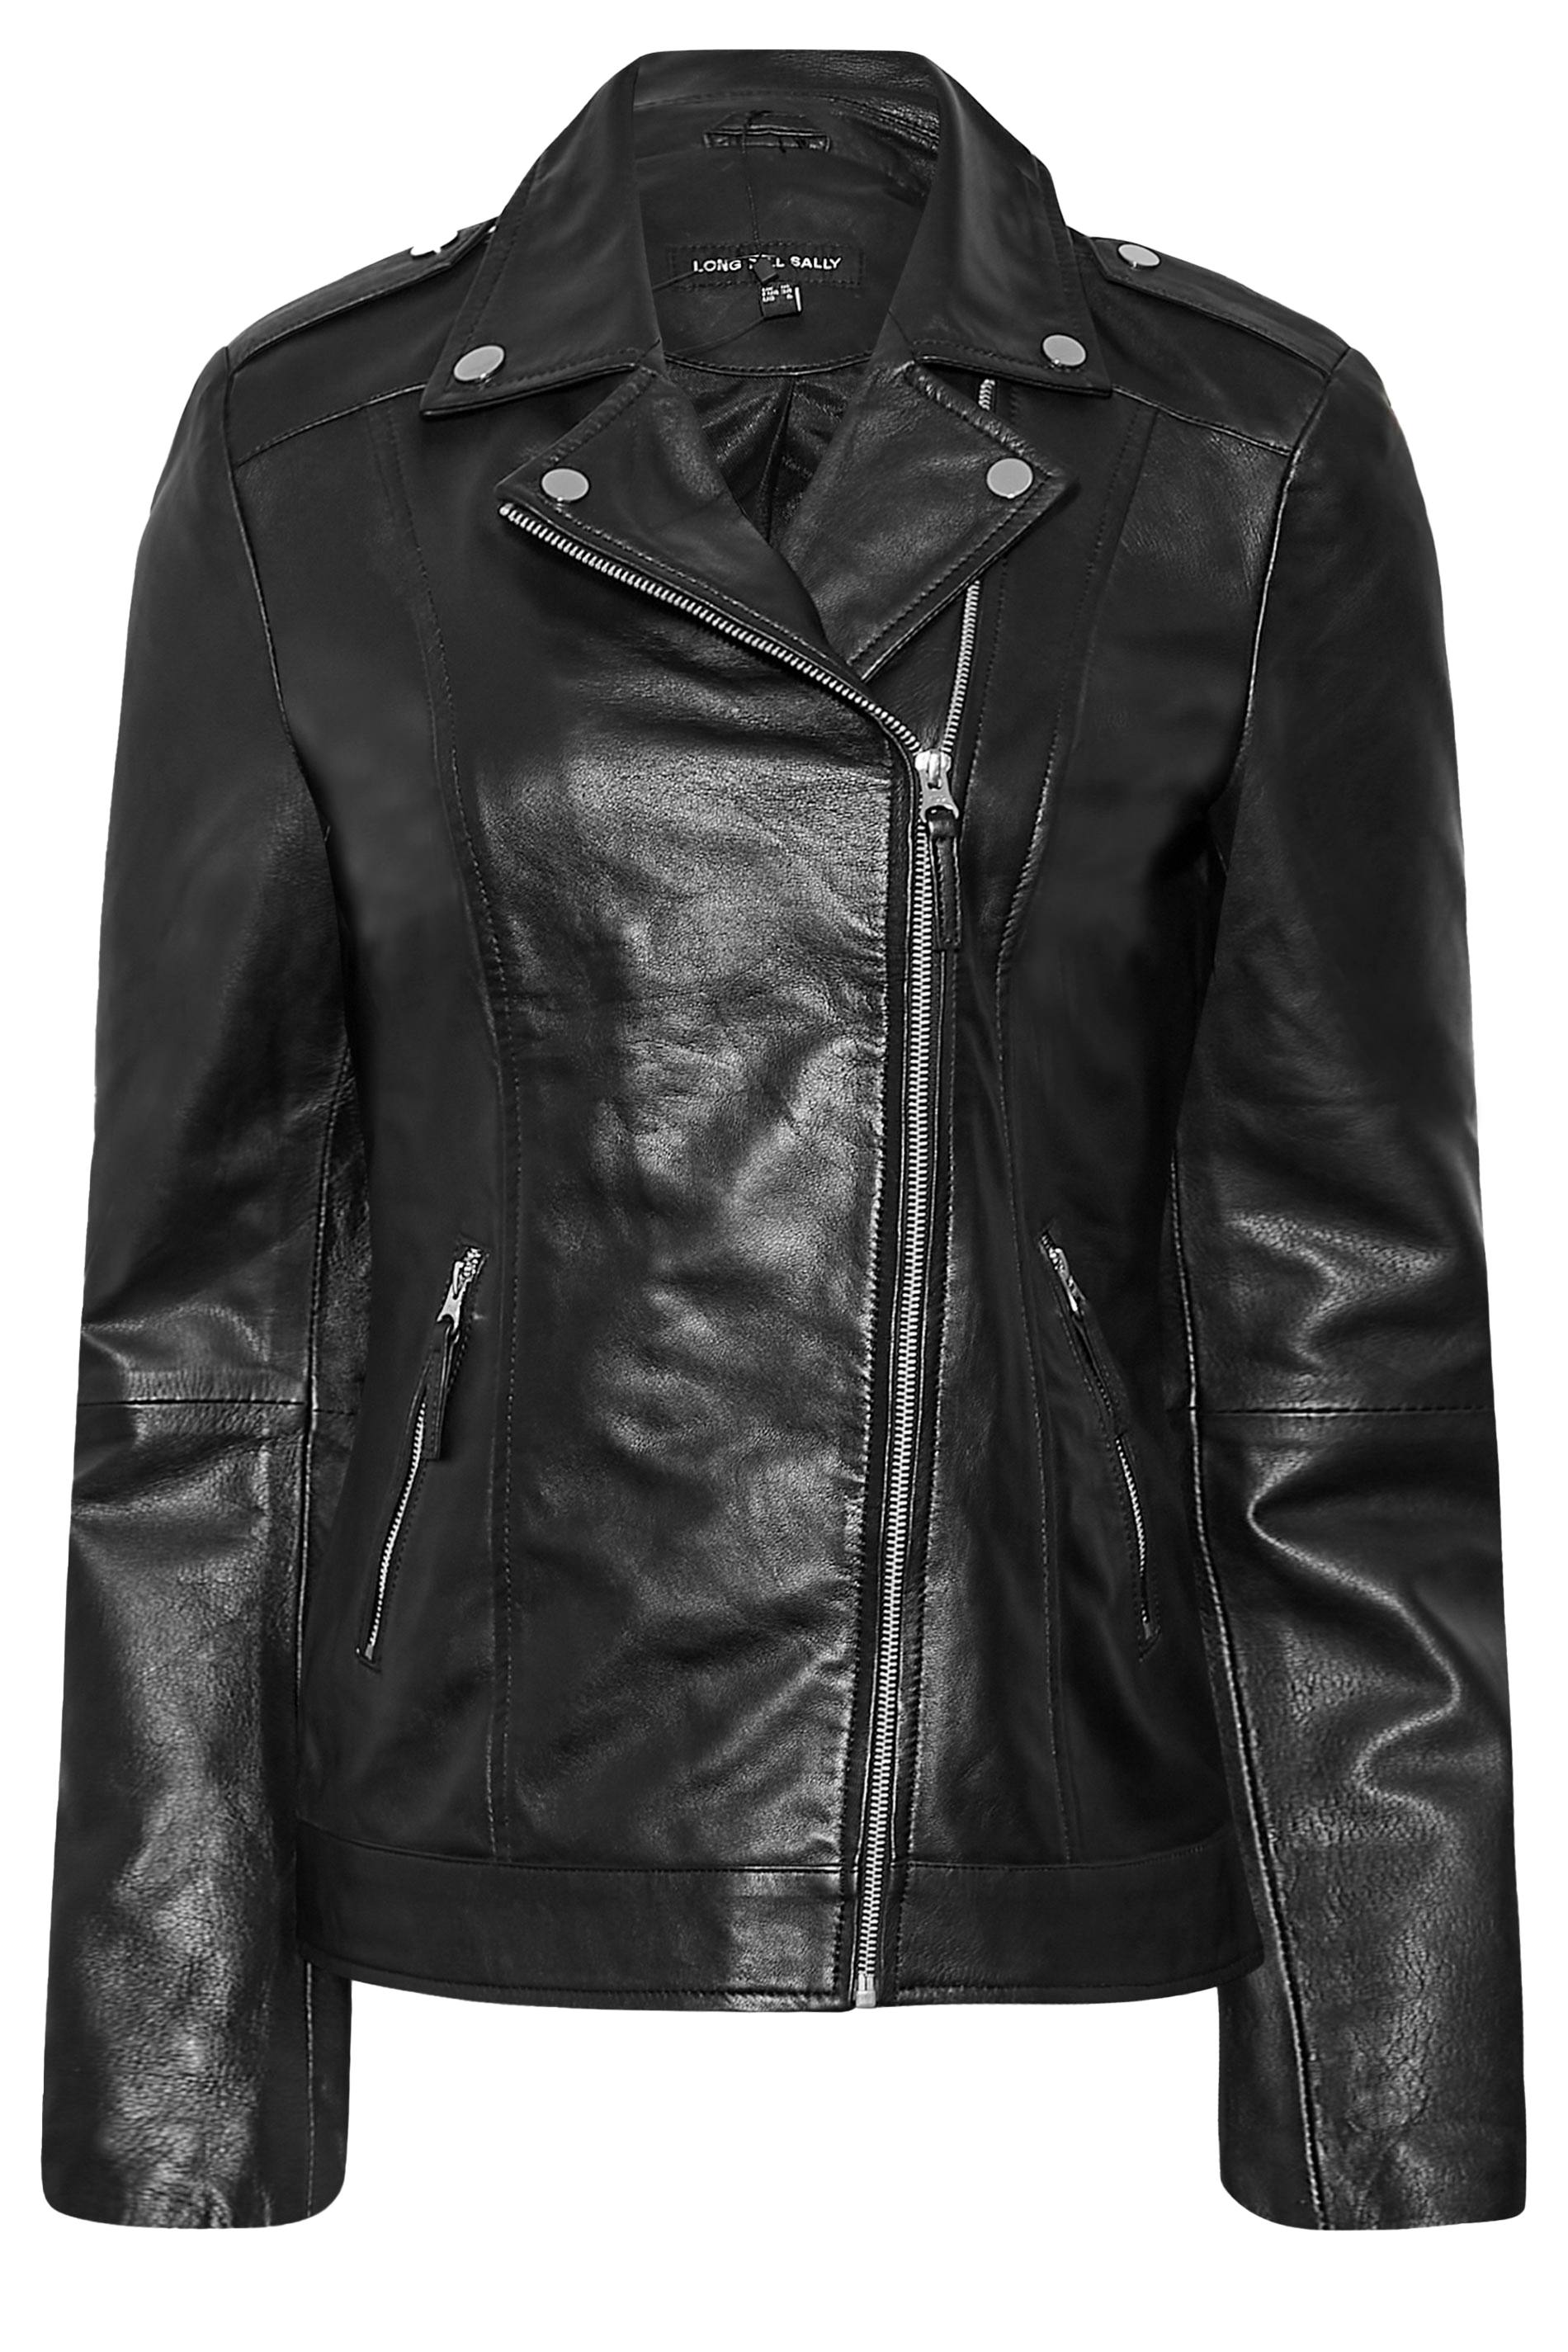 LTS Tall Women's Black Leather Biker Jacket | Long Tall Sally 2